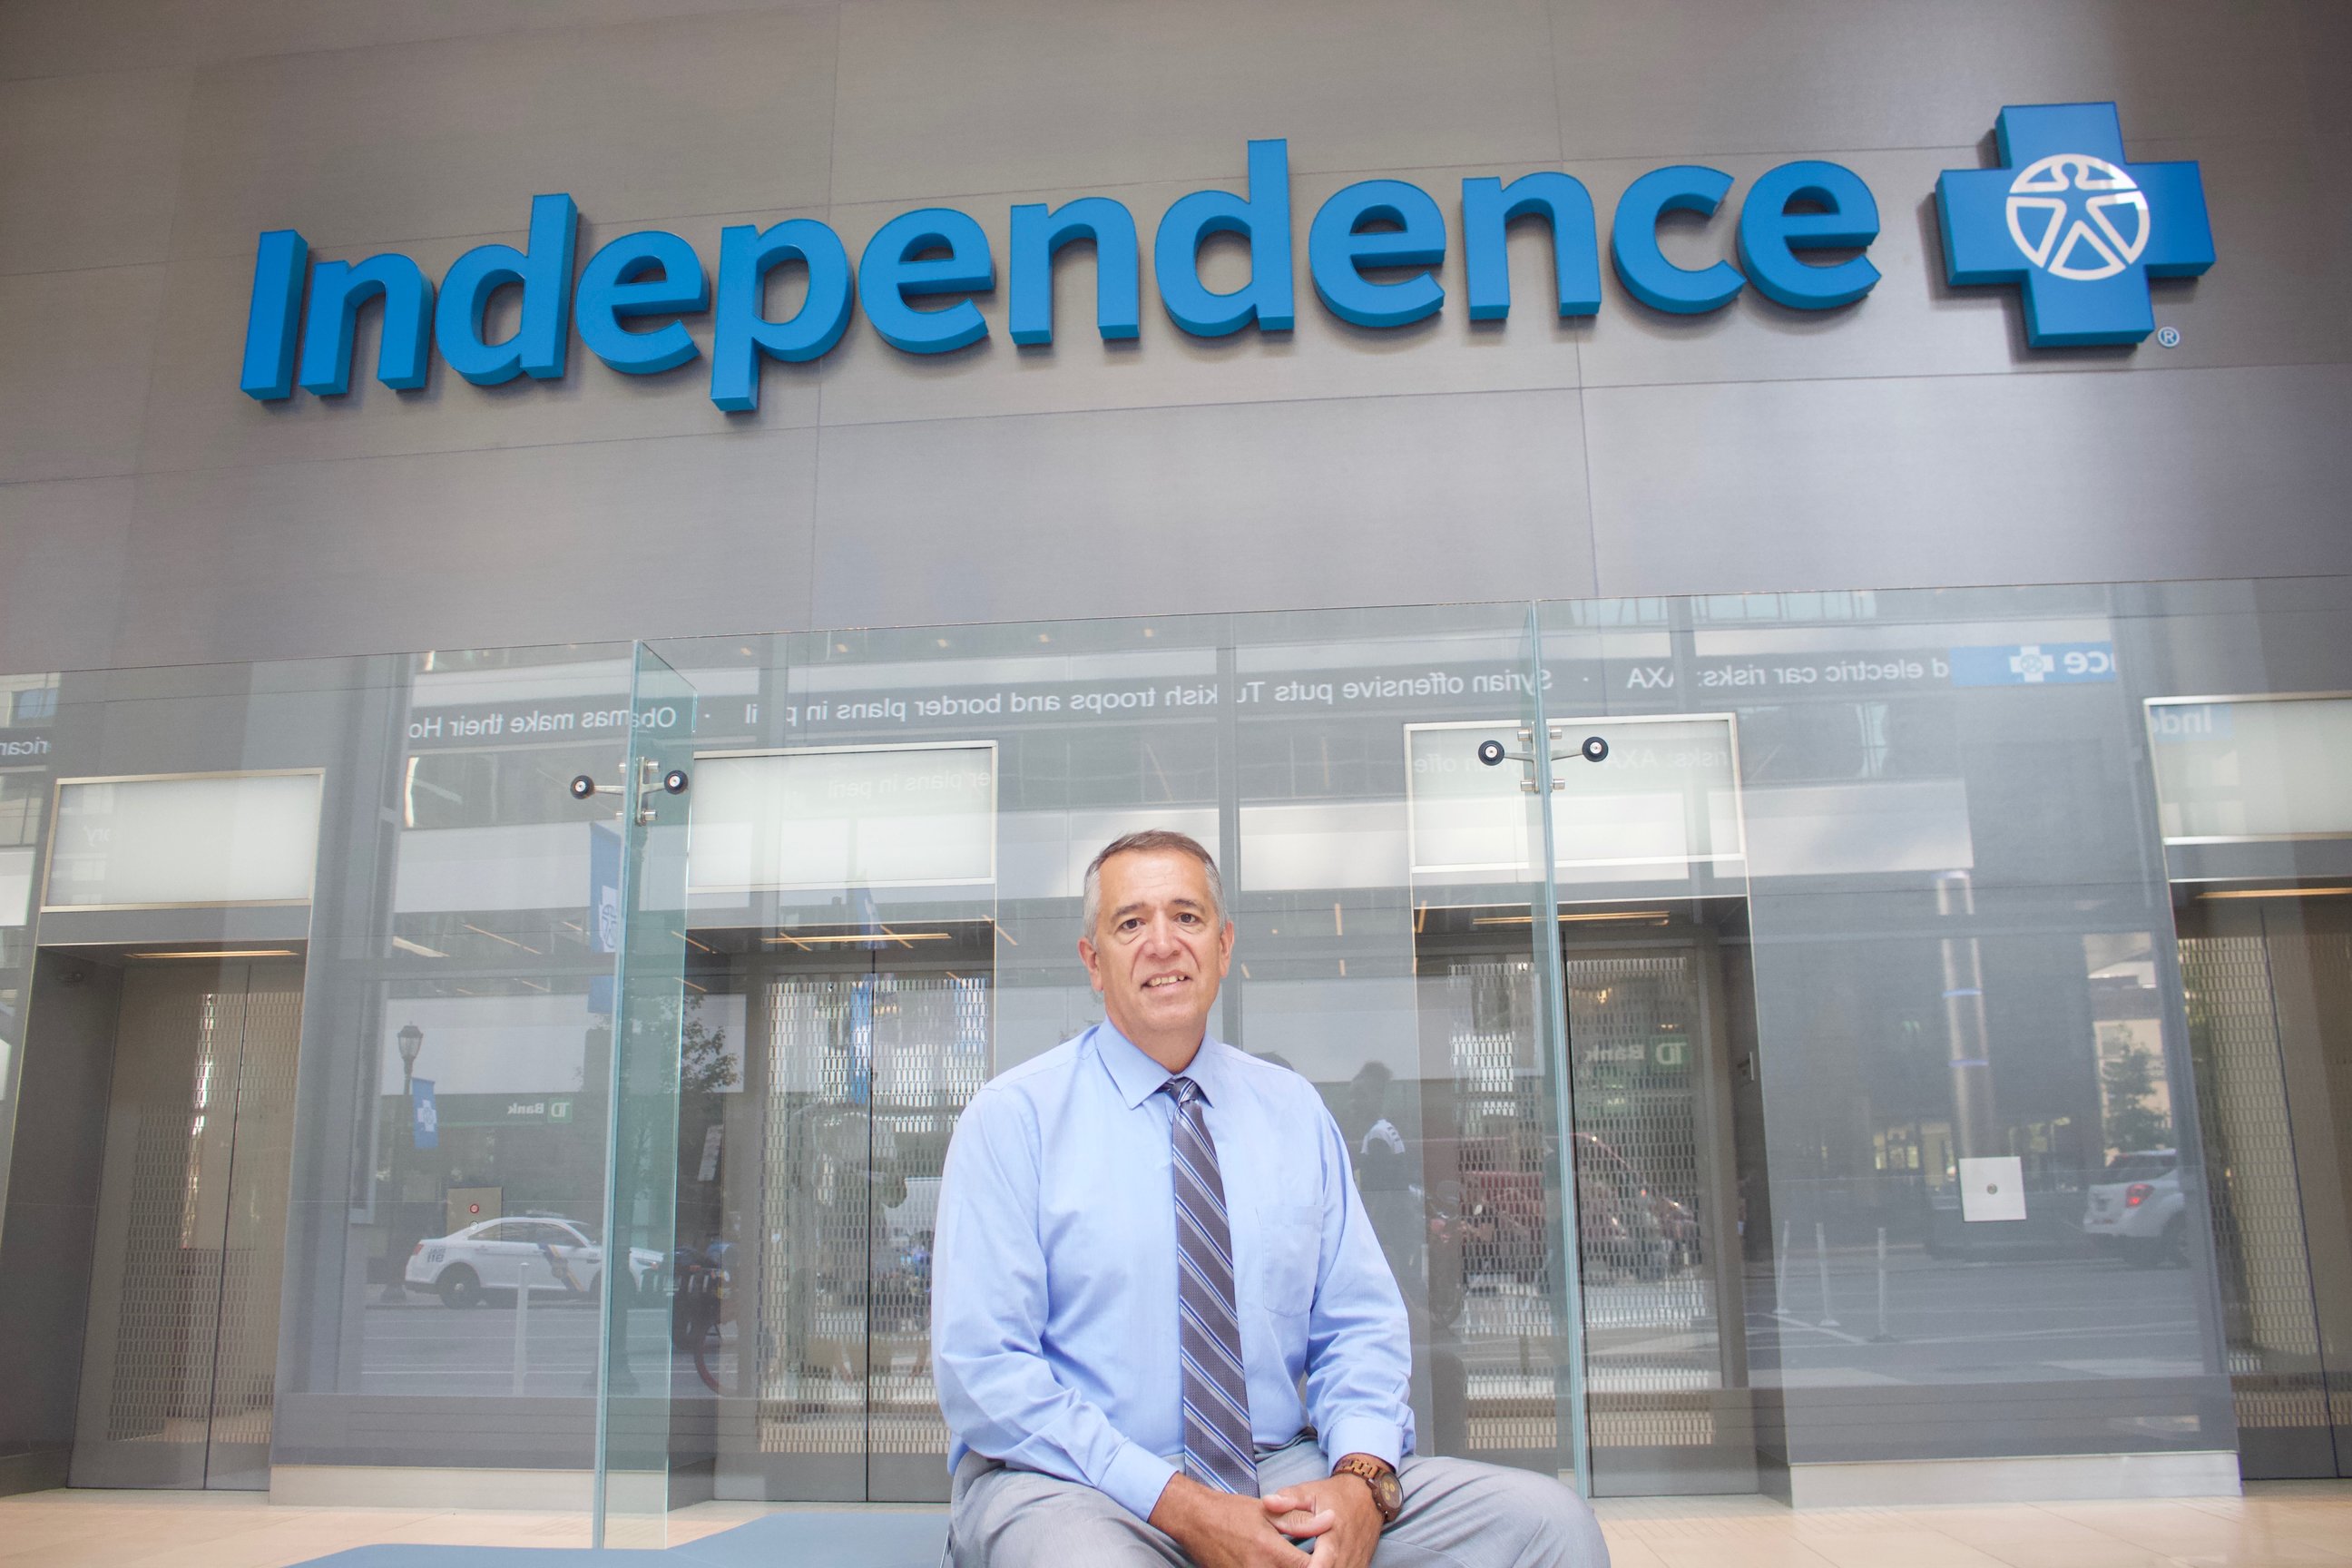 Chuck Stefanosky, supplier diversity director at Independence Blue Cross. Photo: Emily Neil/AL DÍA News. 